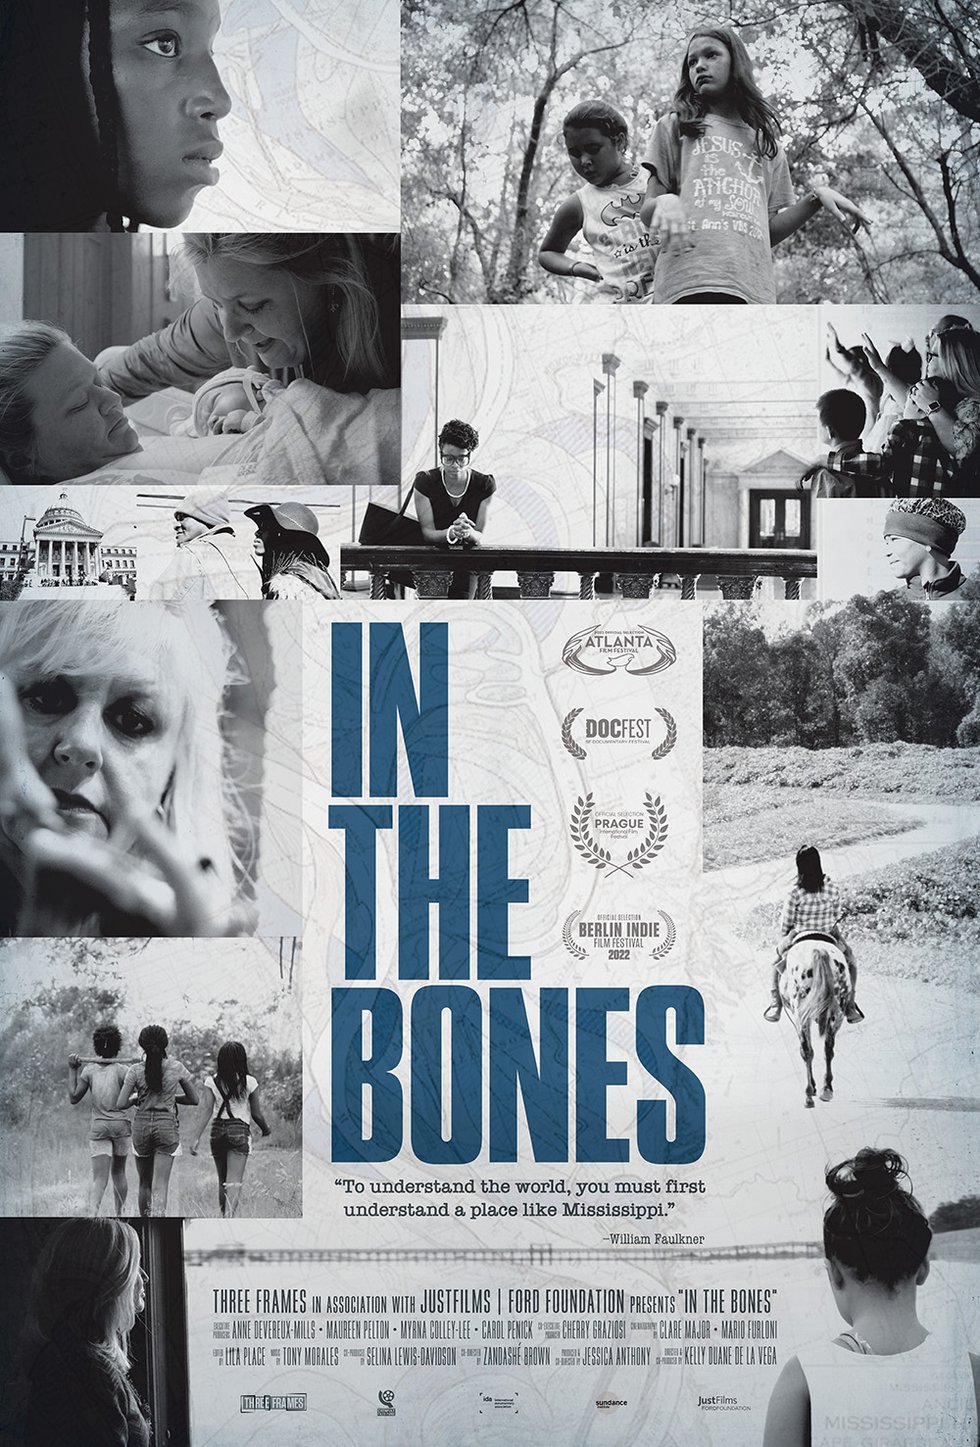 In The Bones Women's Studies Documentary